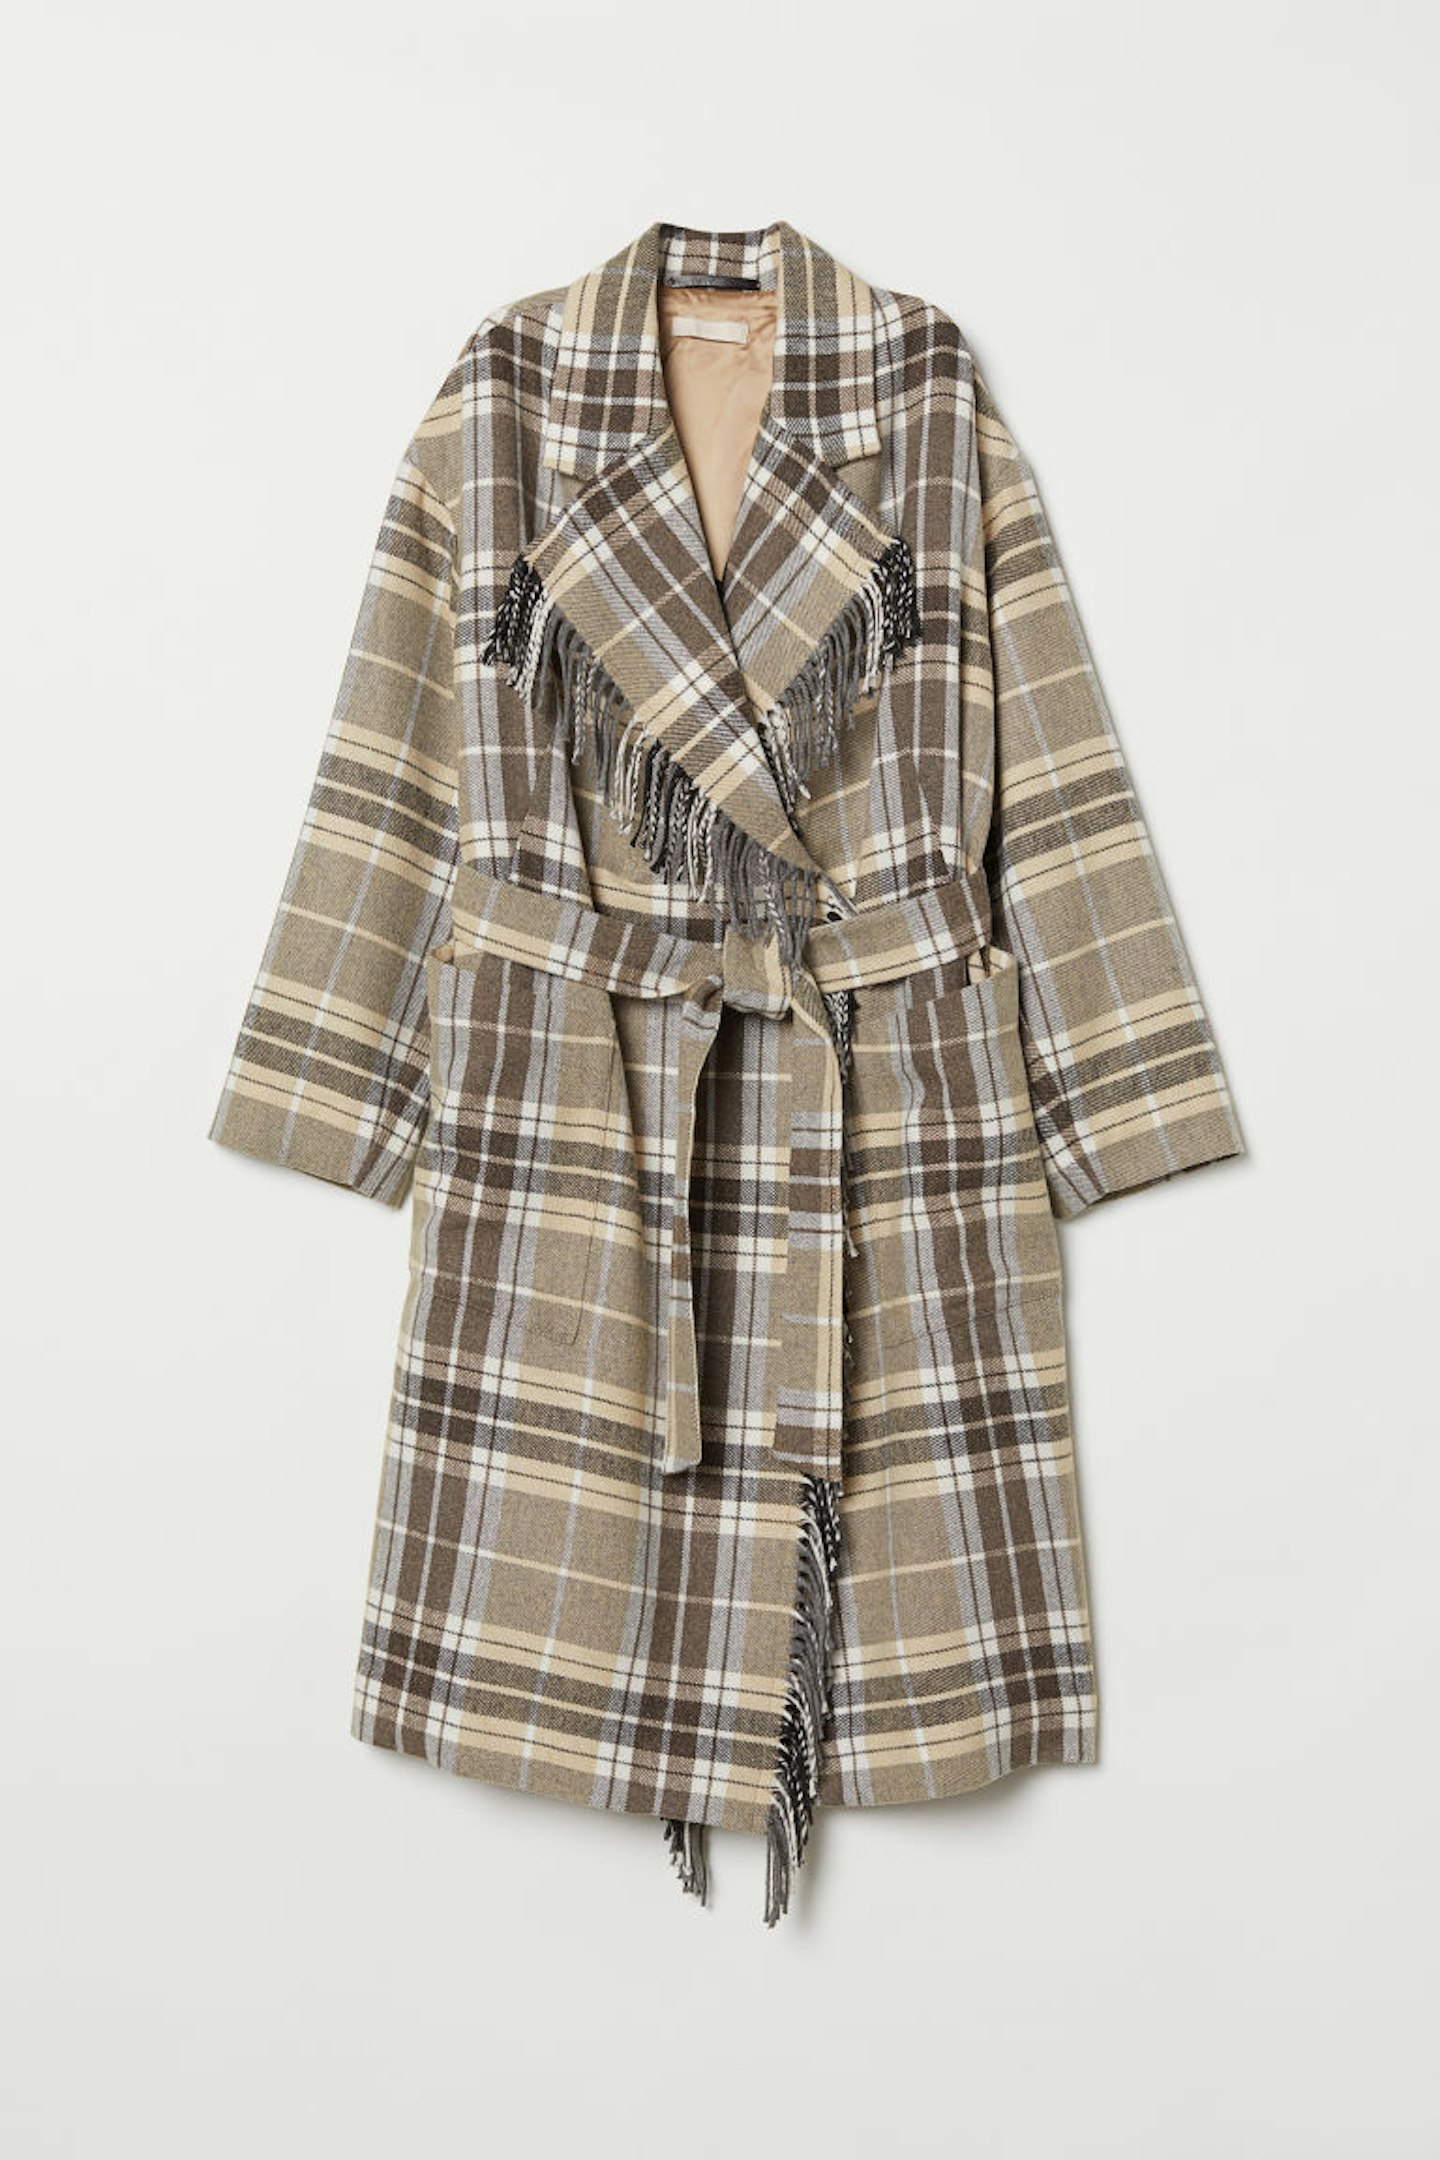 H&M, Coat With A Tie Belt, £79.99